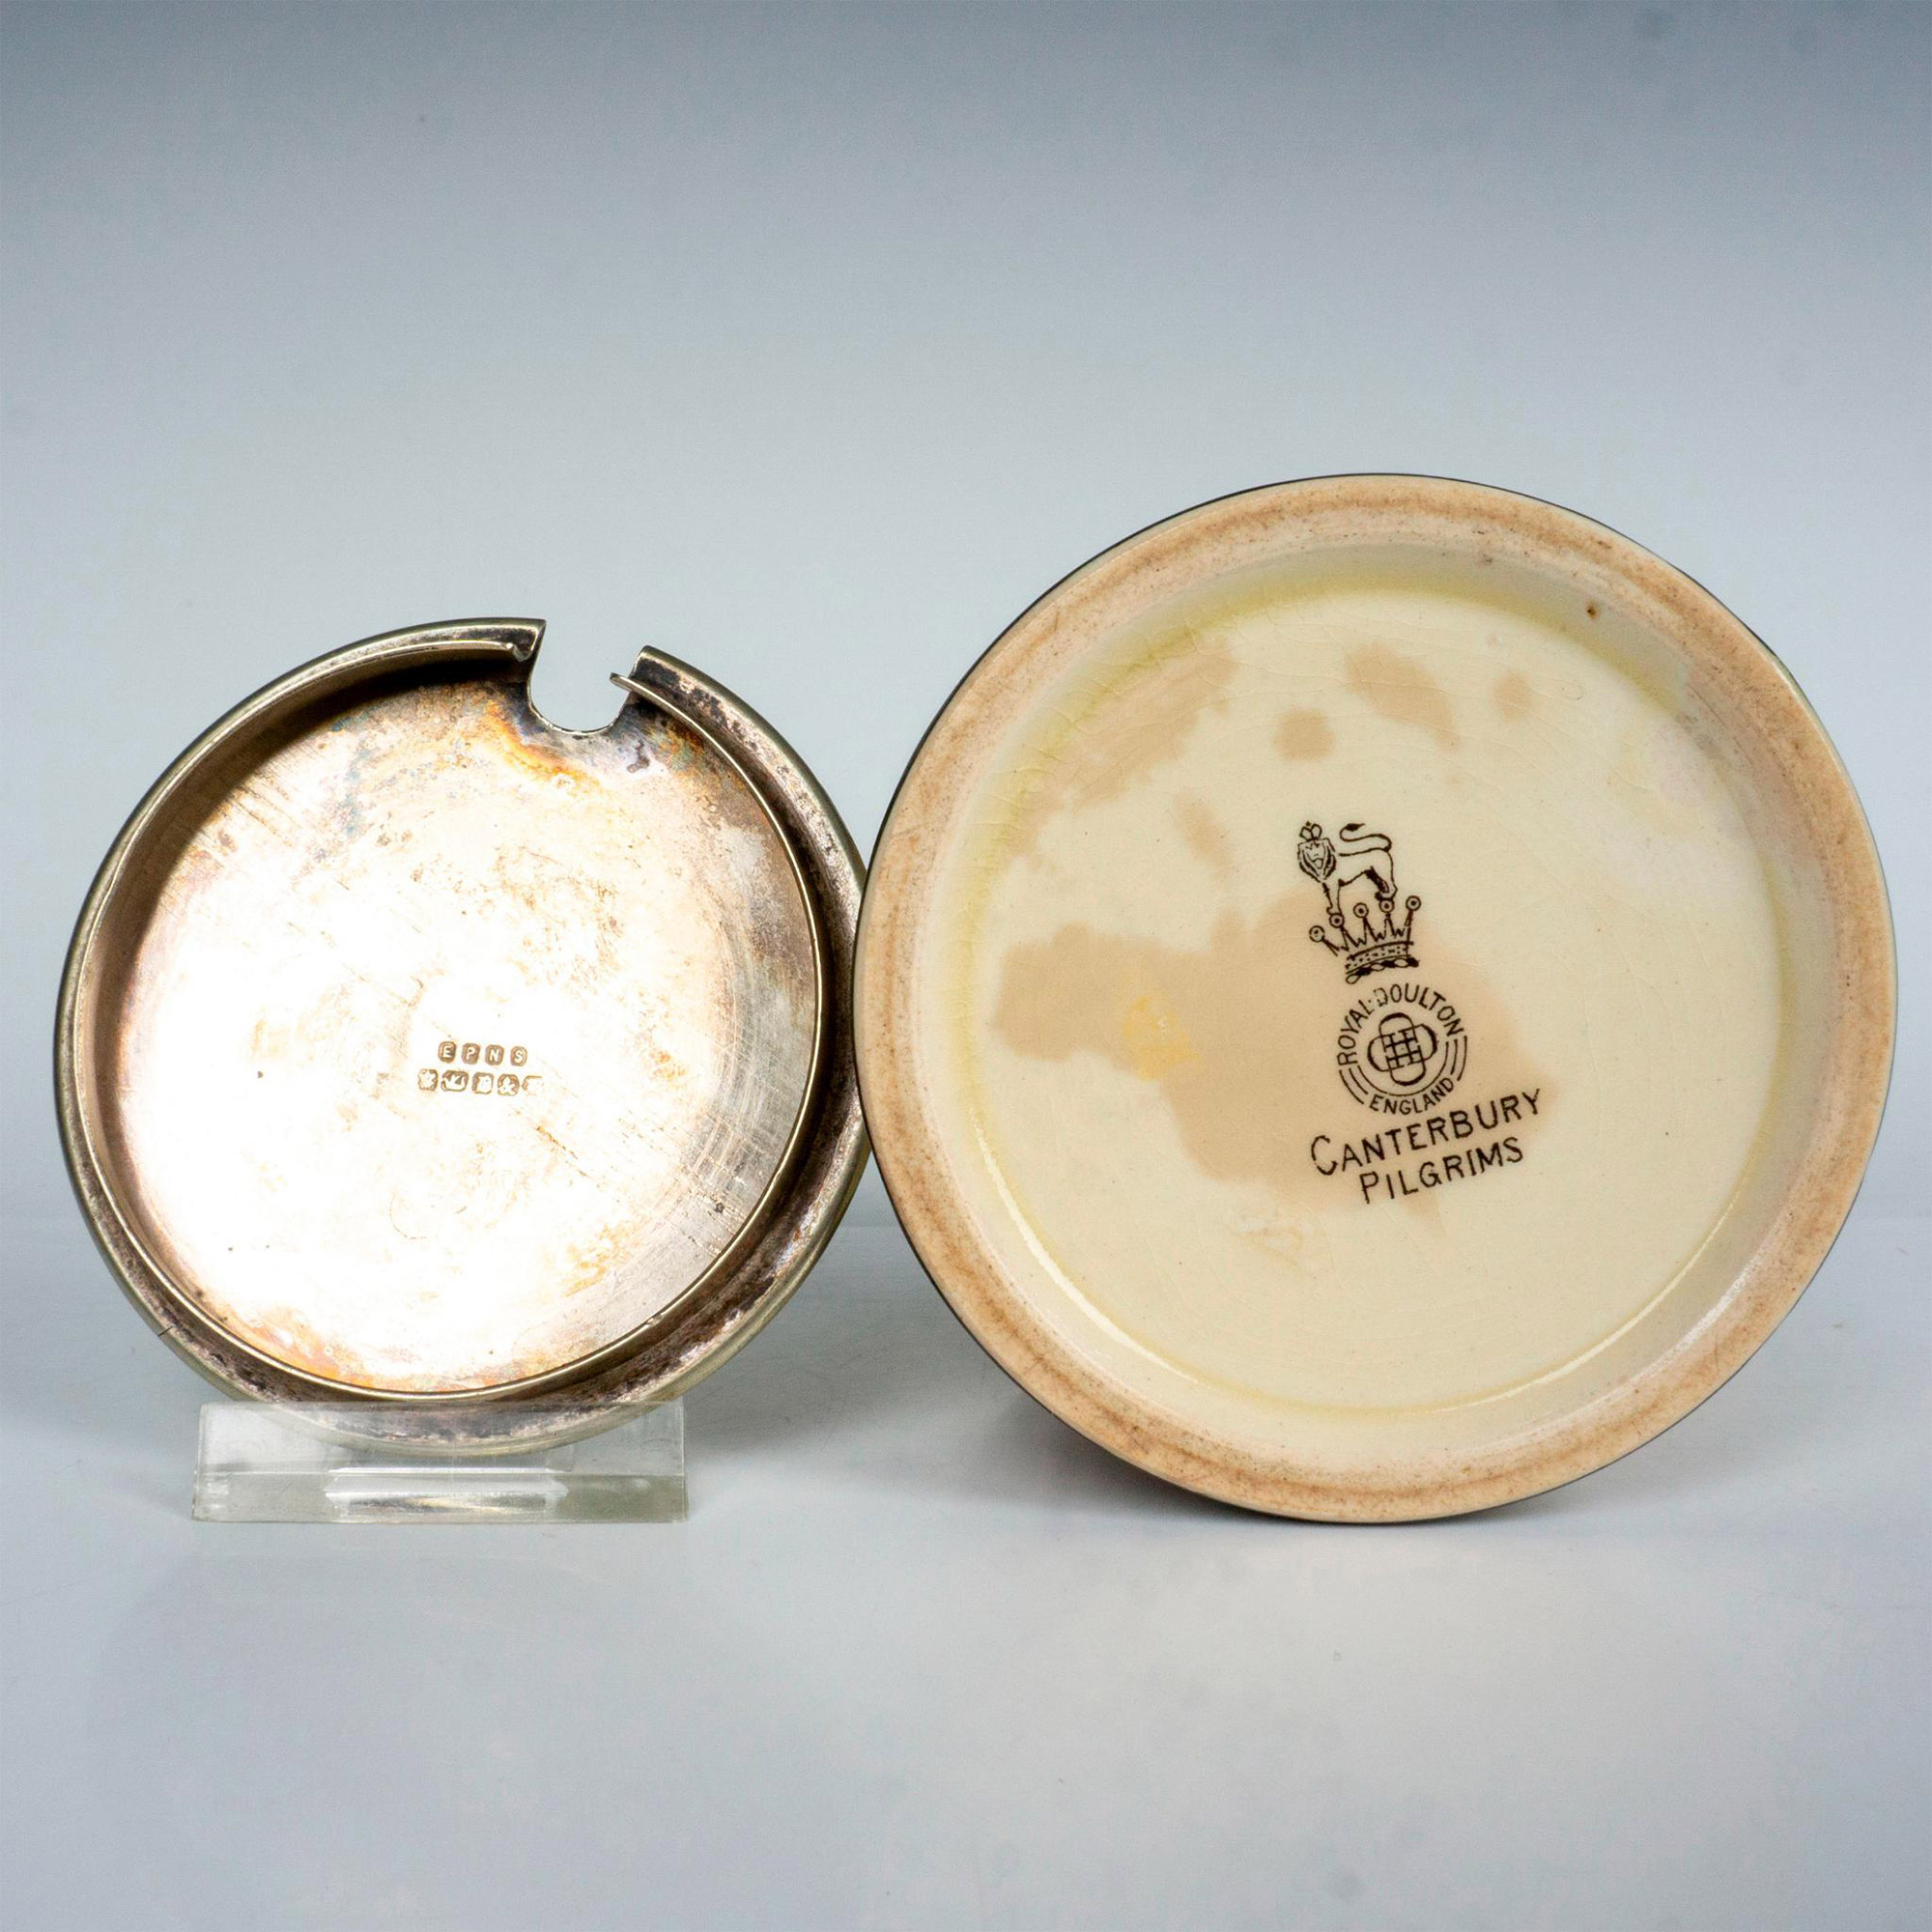 Royal Doulton Series Ware Jam Jar, Canterbury Pilgrims - Image 3 of 3